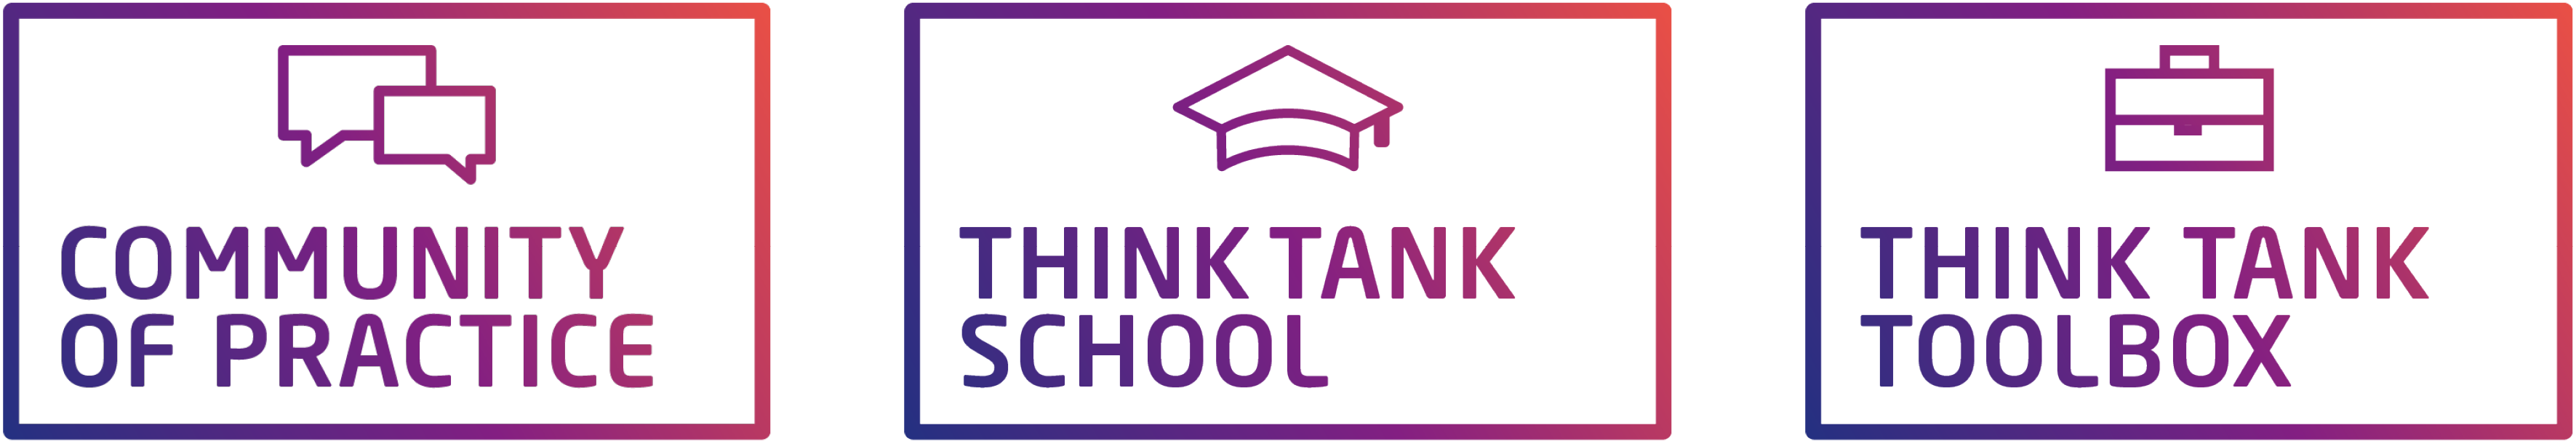 MERICS-Think-Tank-Lab-School-Toolbox-Community-of-practice